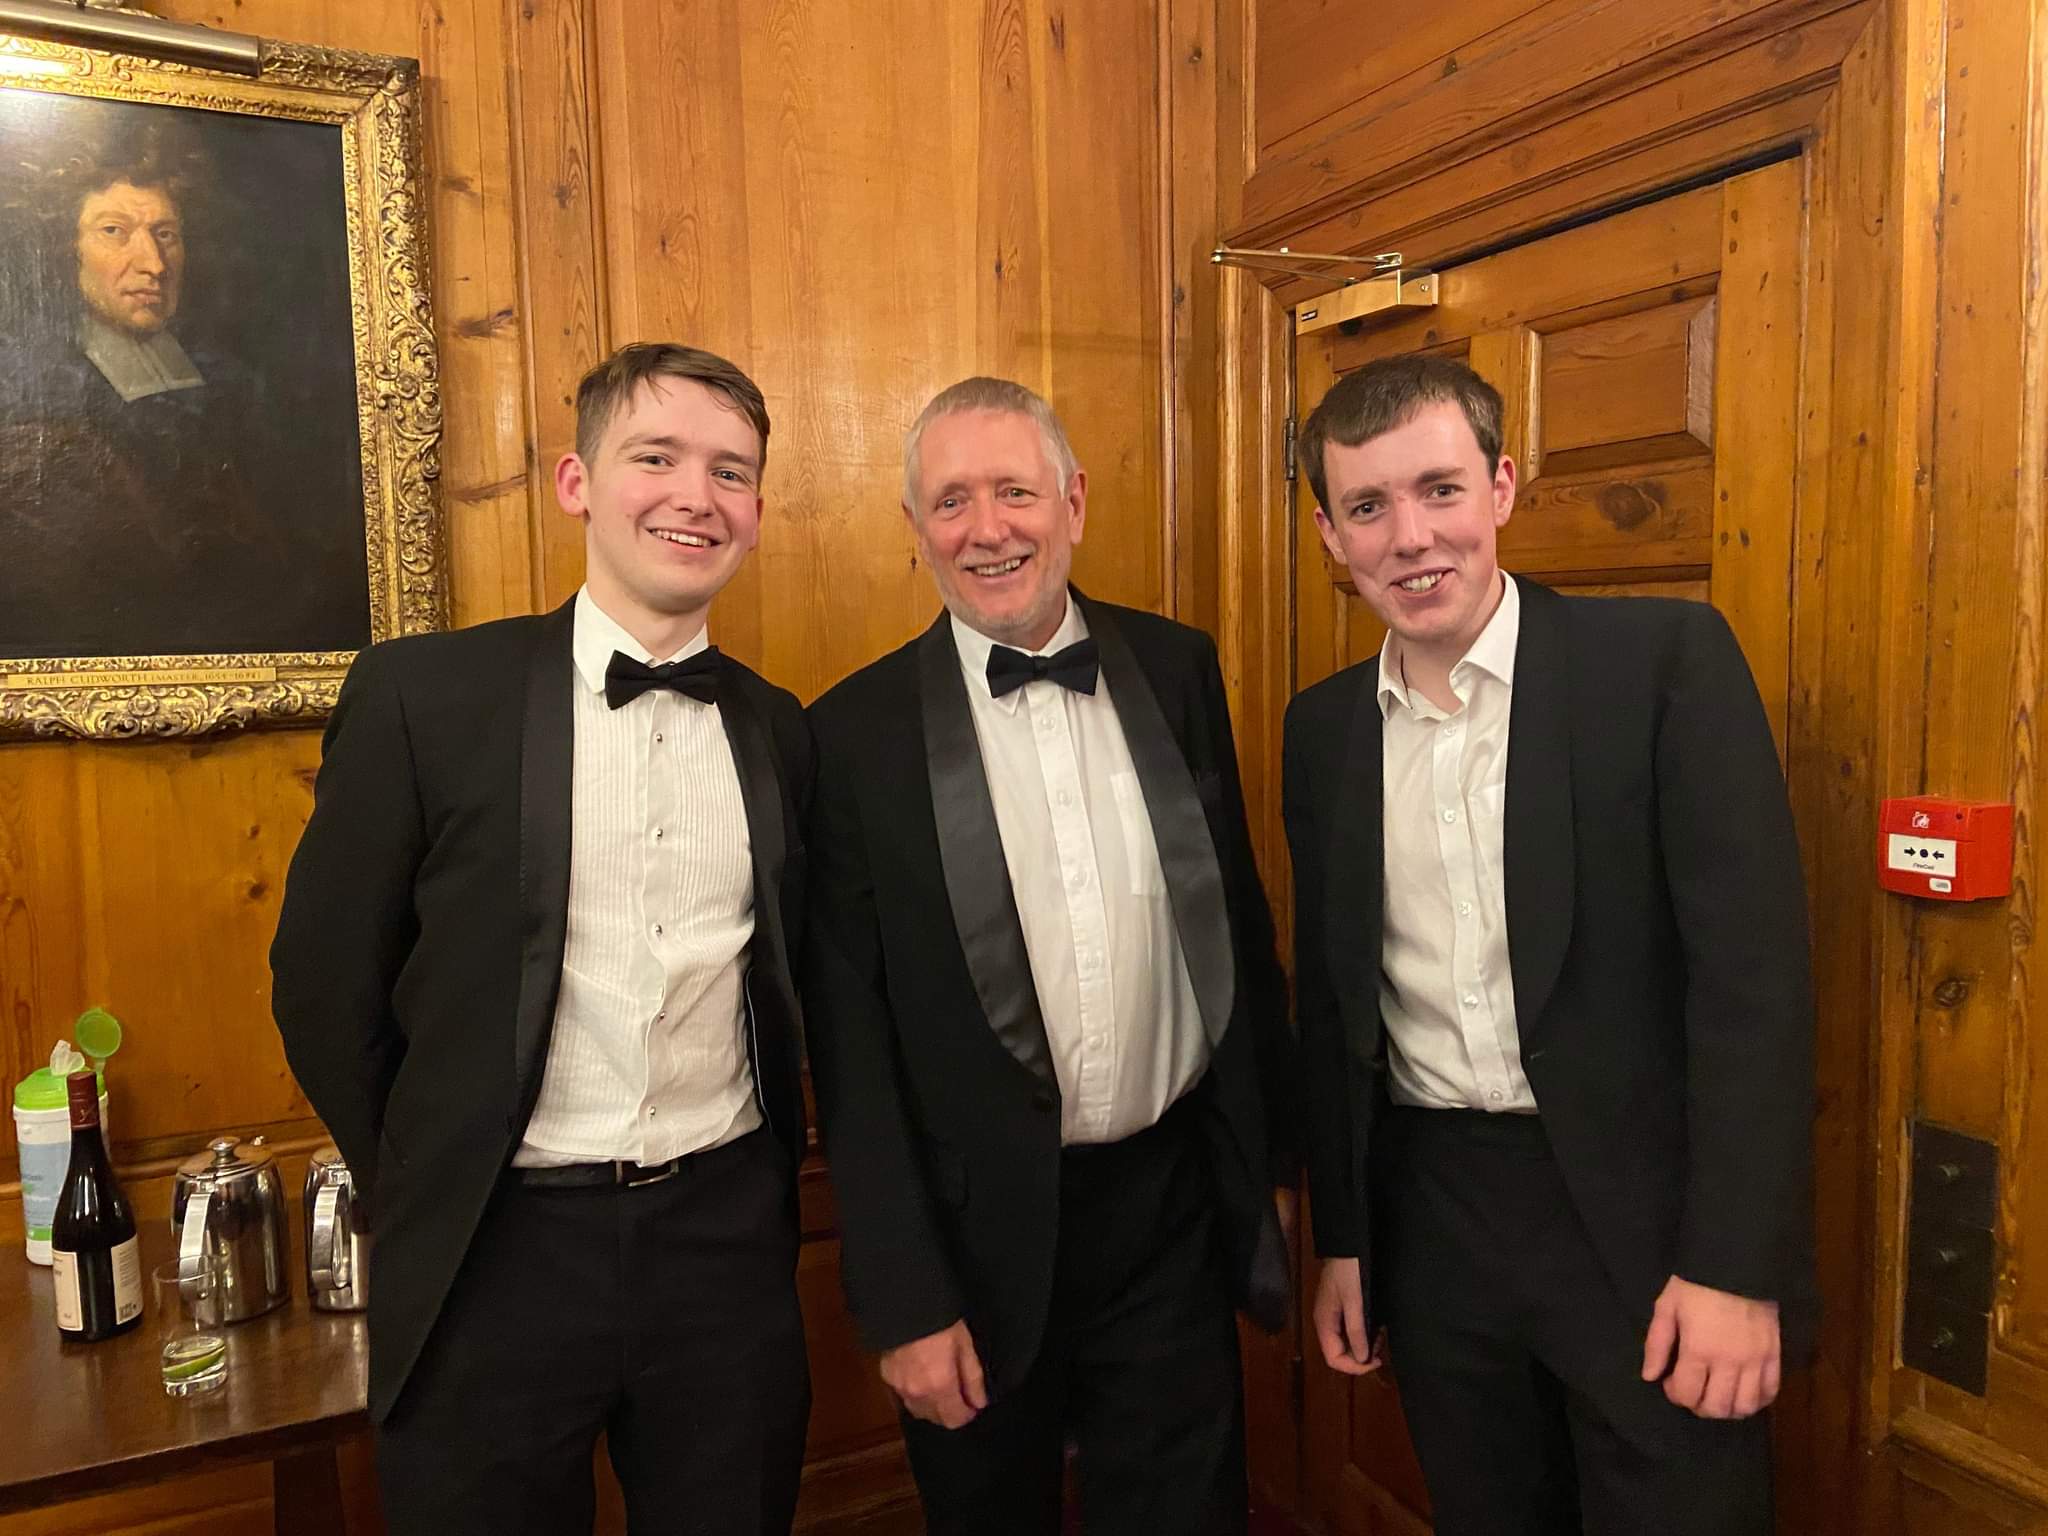 Organ scholars Tom Burrows (r) and James Tett (l) with Director of Music, Professor David Rowland (c)